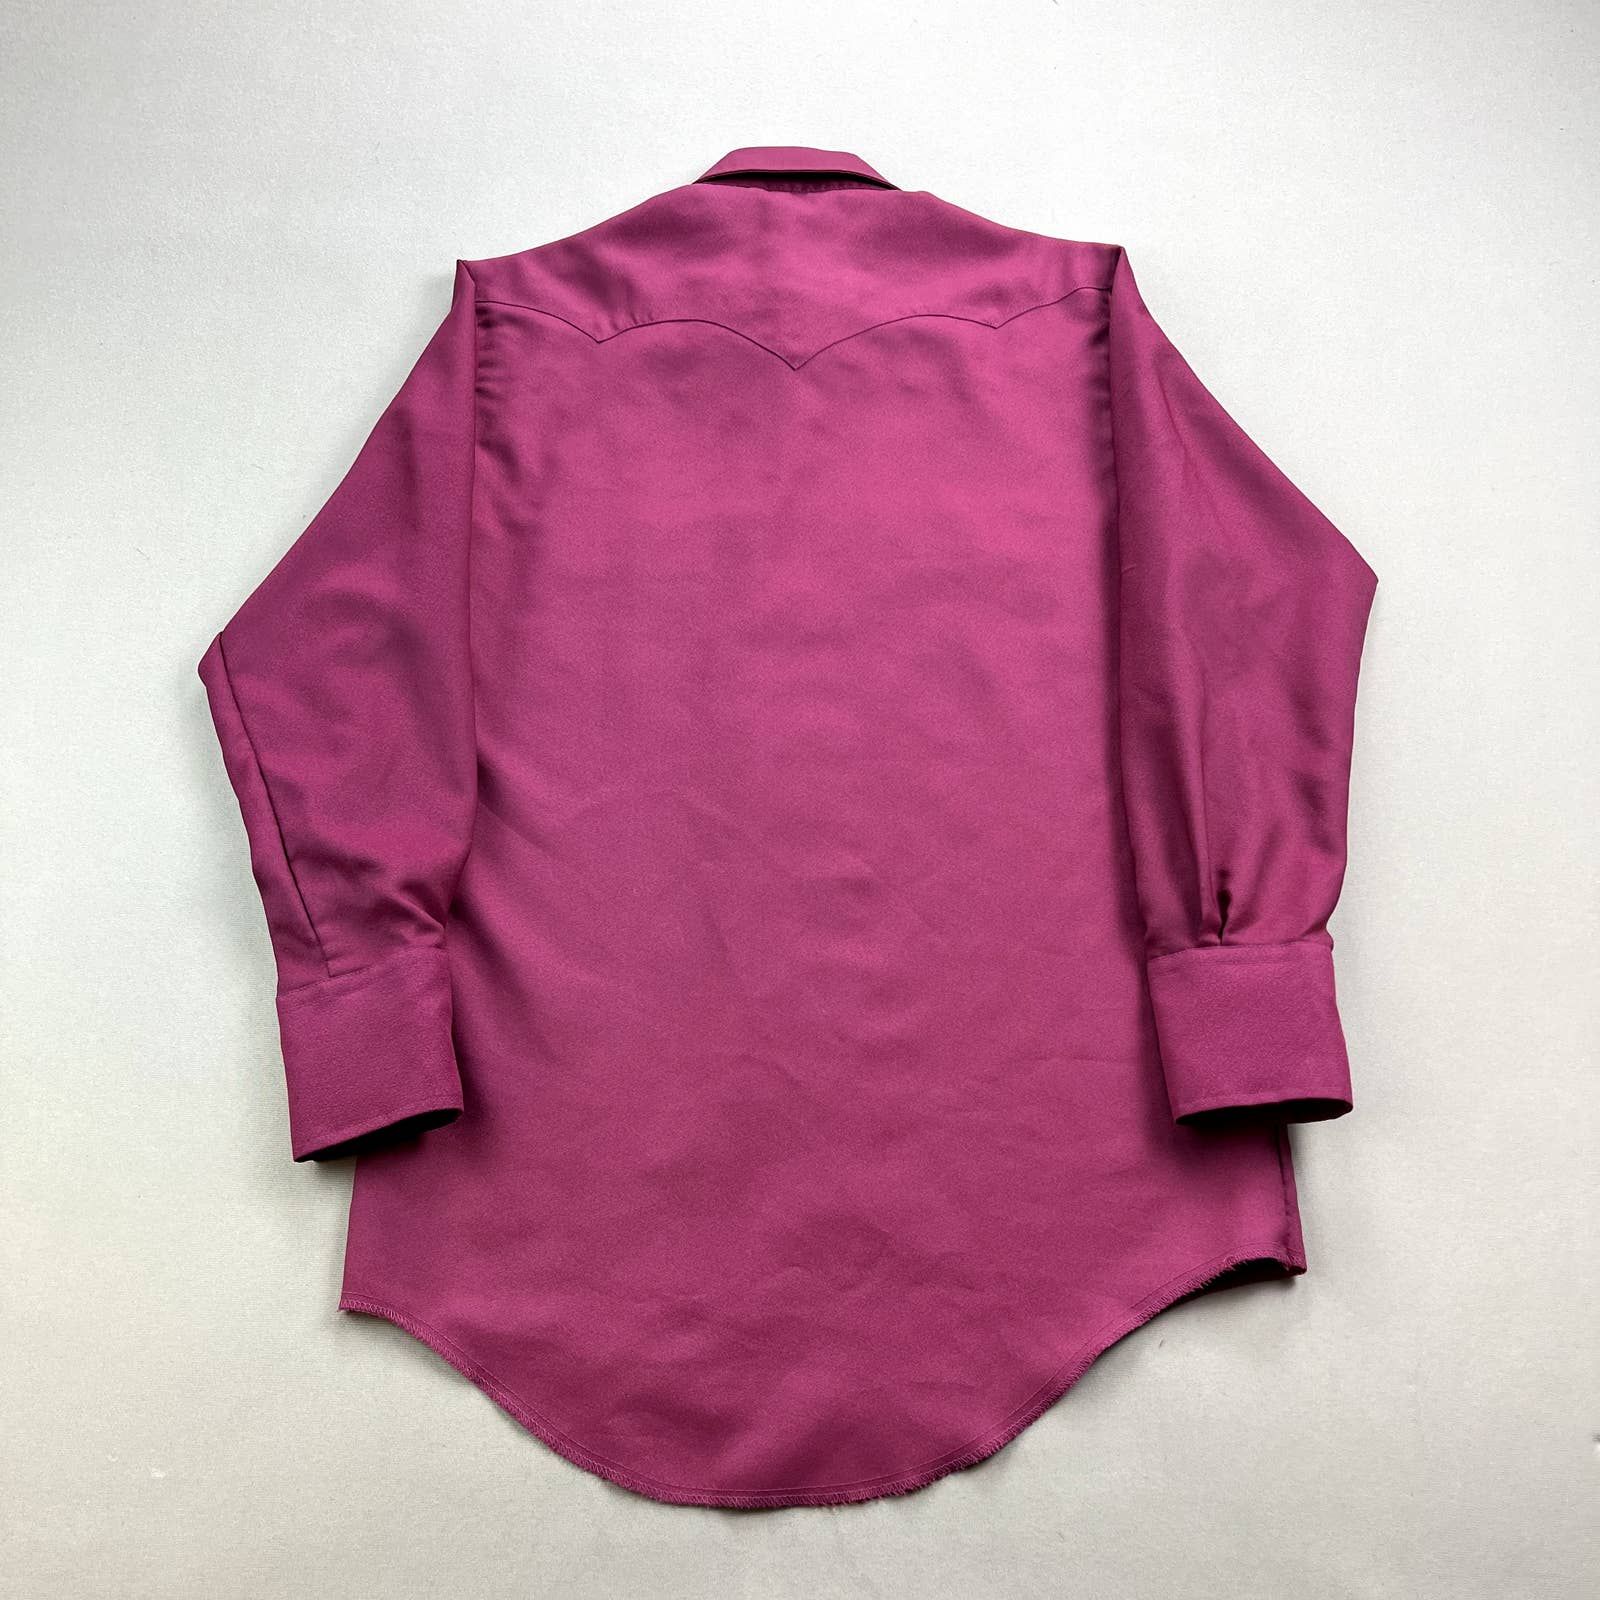 Vintage Vintage Champion Westerns Shirt Medium 15-33 Pink Pearl Snap Size US M / EU 48-50 / 2 - 4 Thumbnail